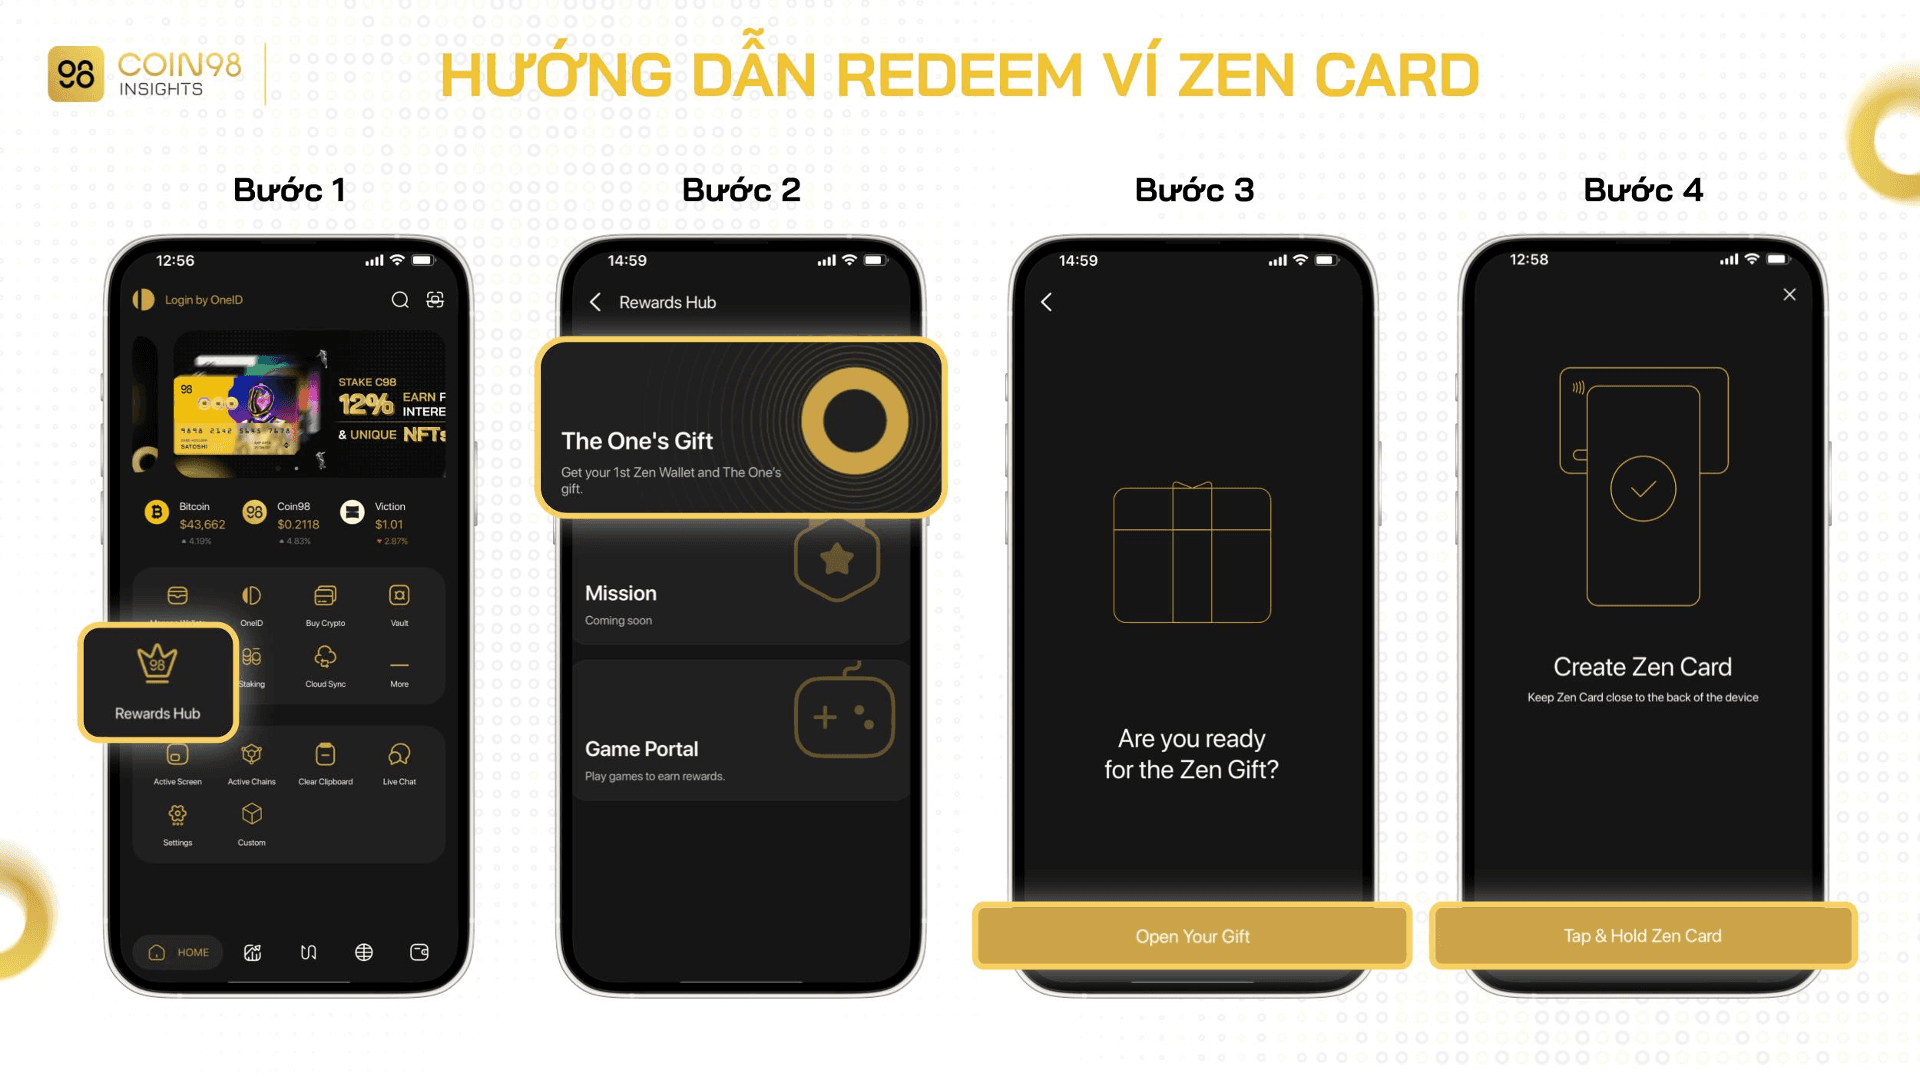 redeem zen card 2